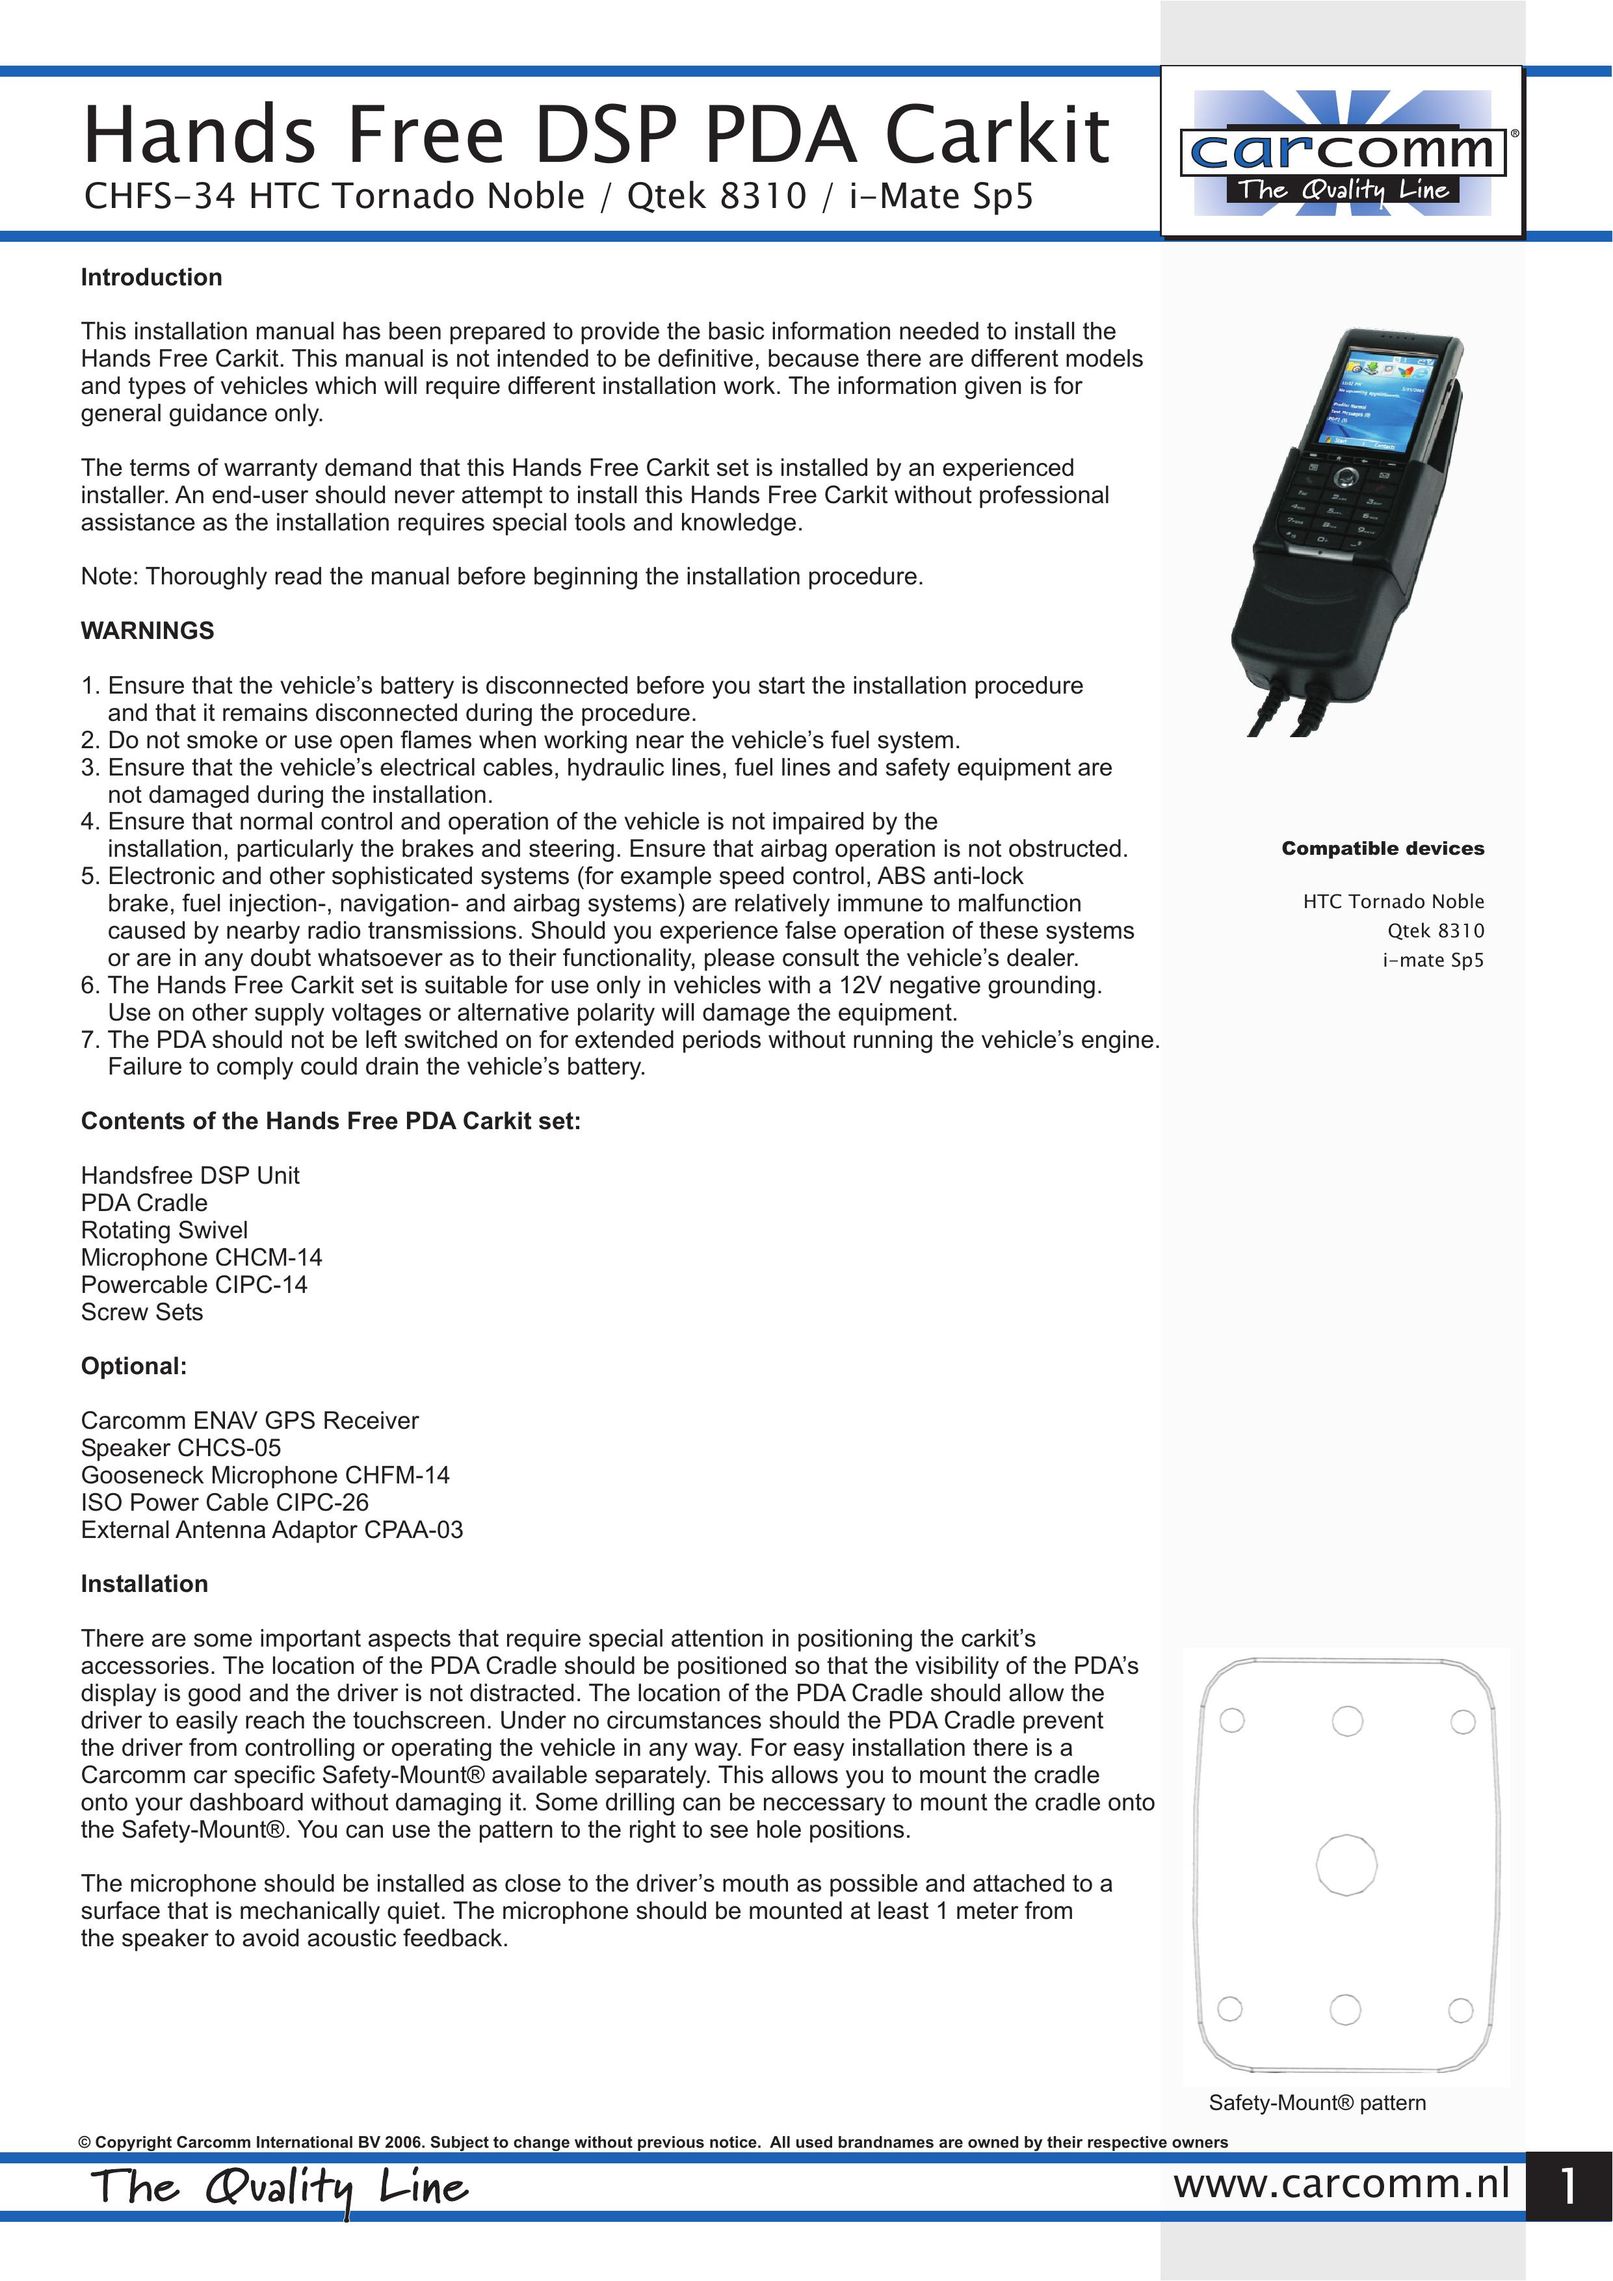 Carcomm Qtek 8310 Car Speaker User Manual